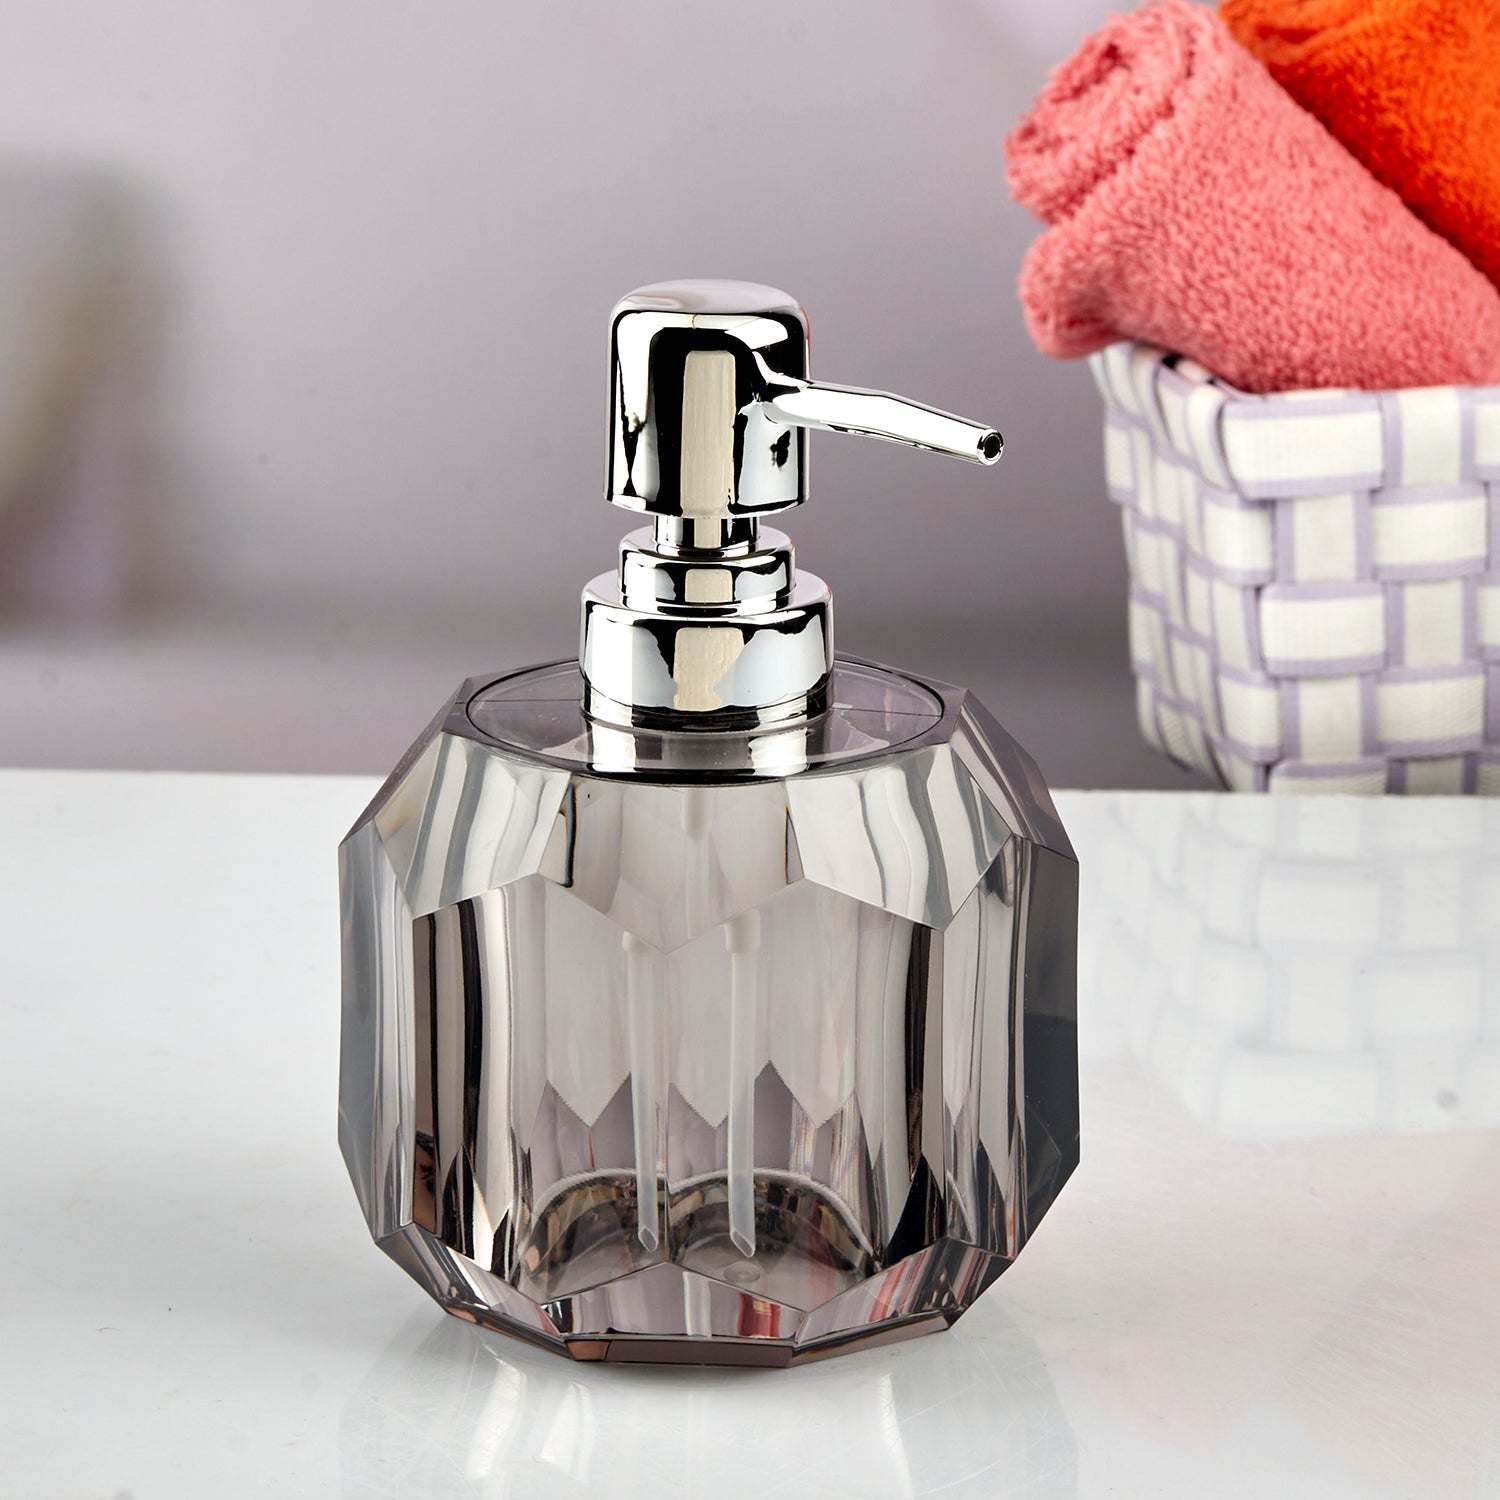 Acrylic Soap Dispenser for Bathroom handwash (10730)